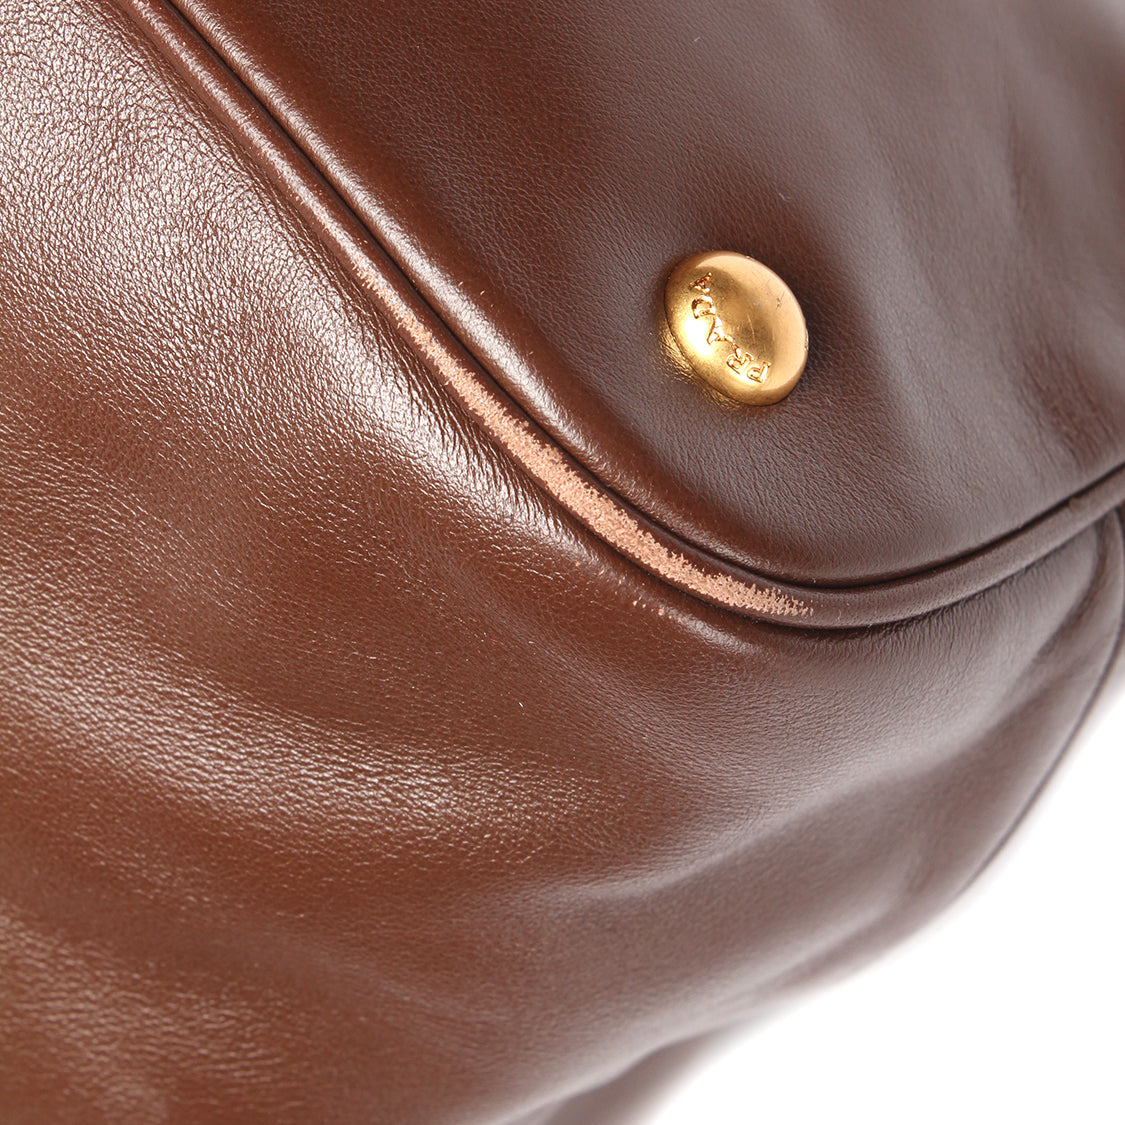 Soft Calf Leather Handbag